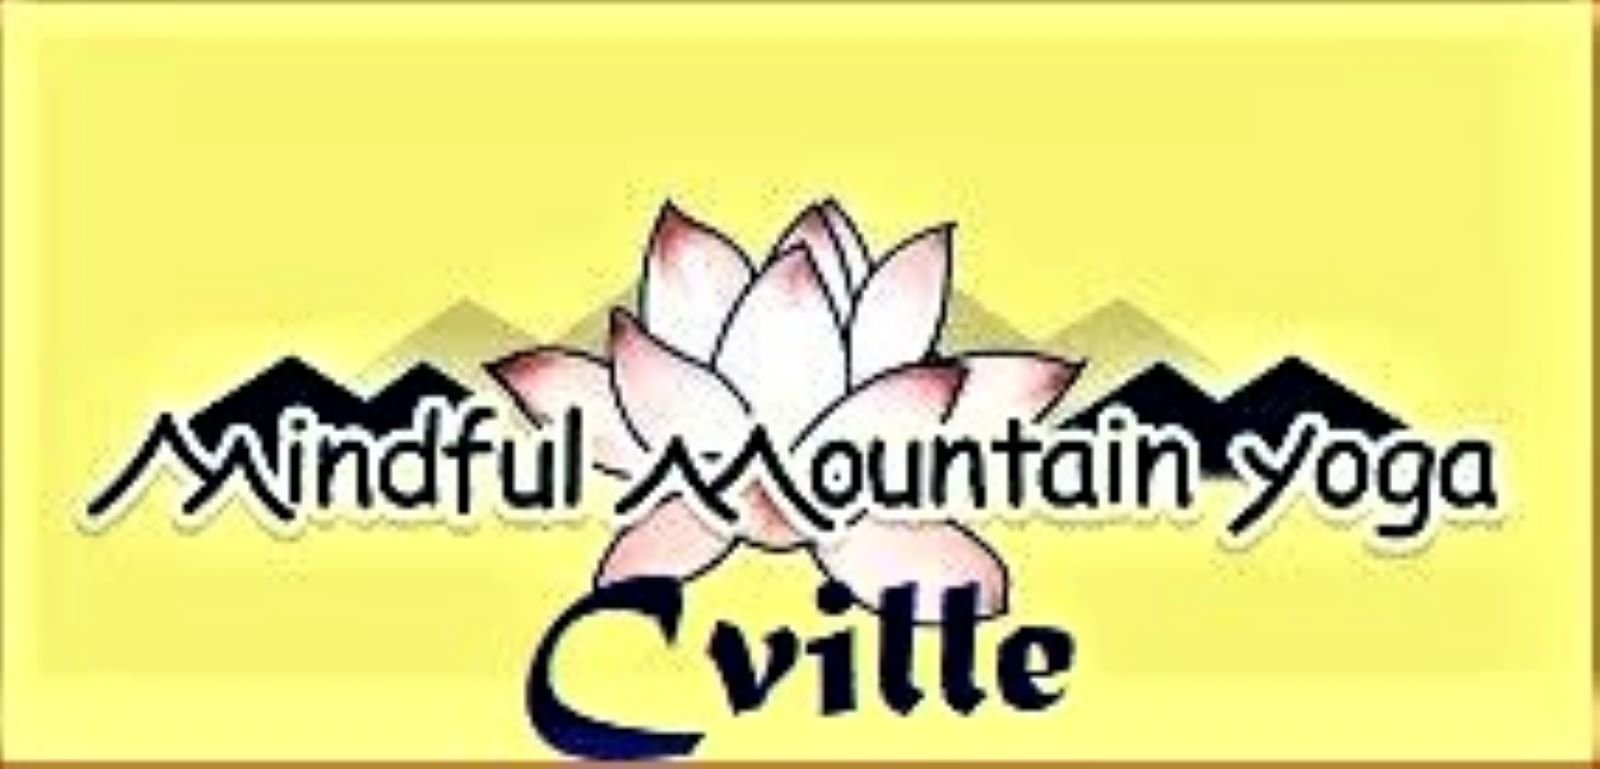 Mindful Mountain Yoga Cville